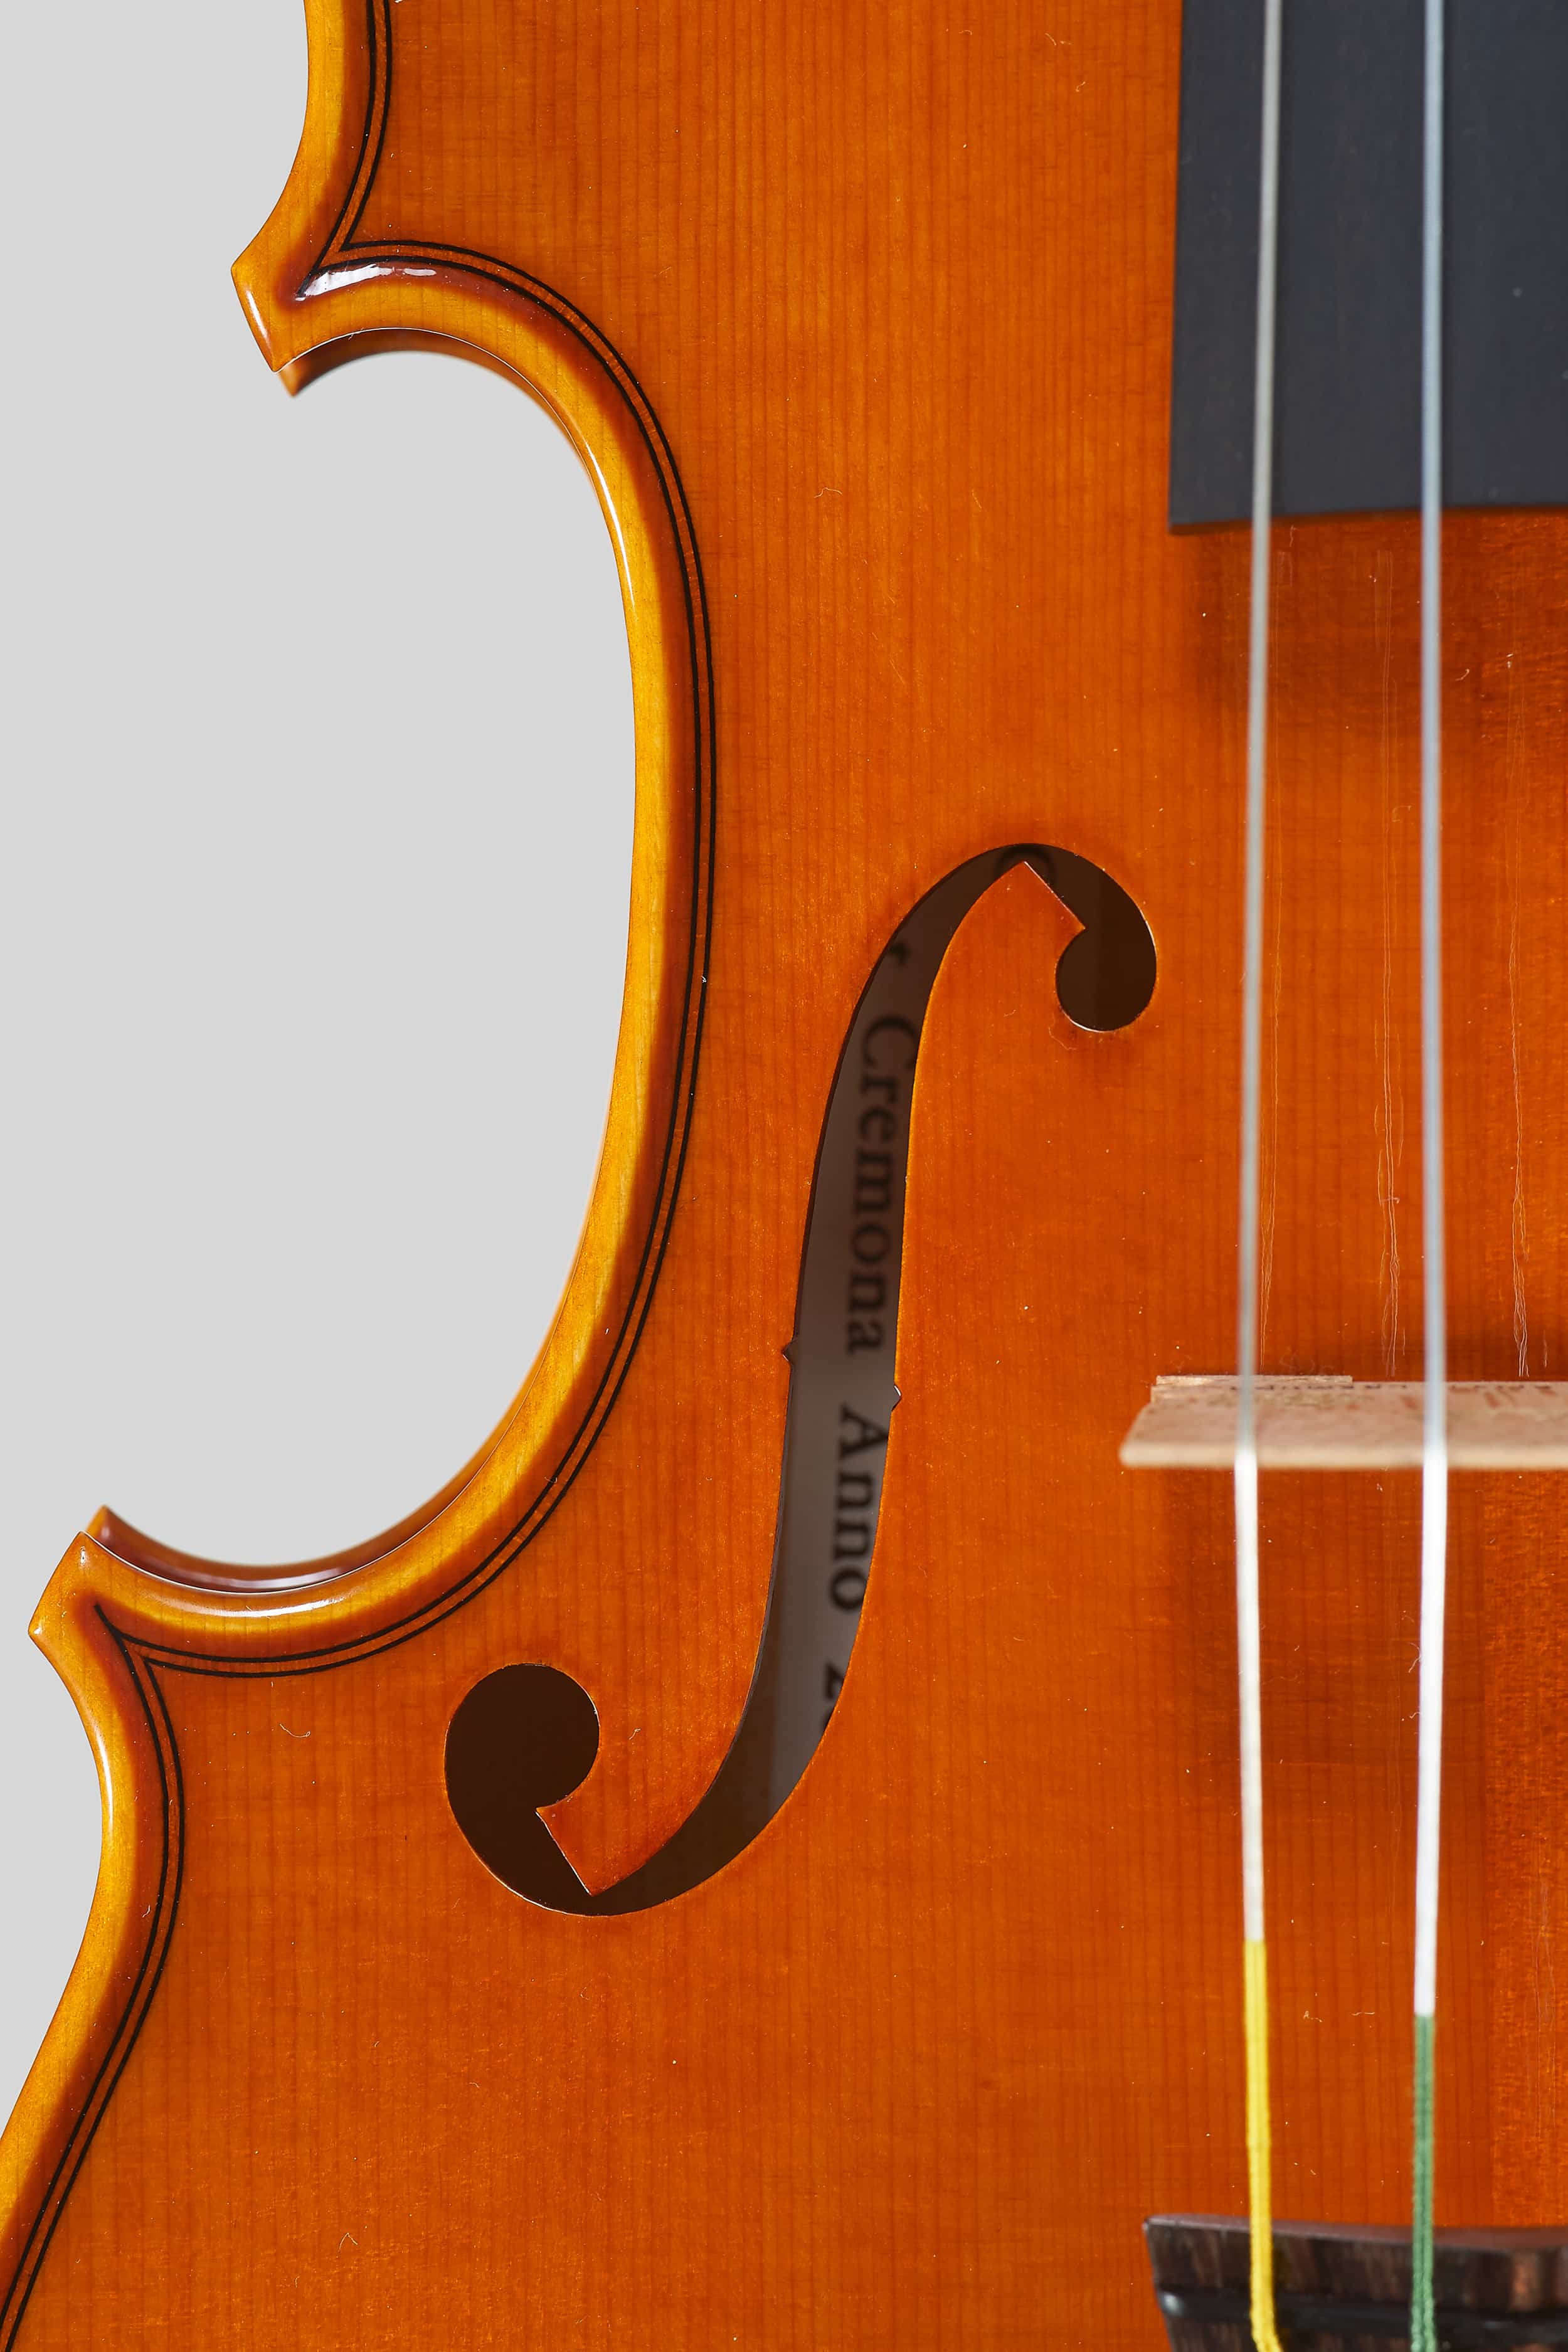 Anno 2016 – Violino modello A. Stradivari “Soil” 1714 - Effe